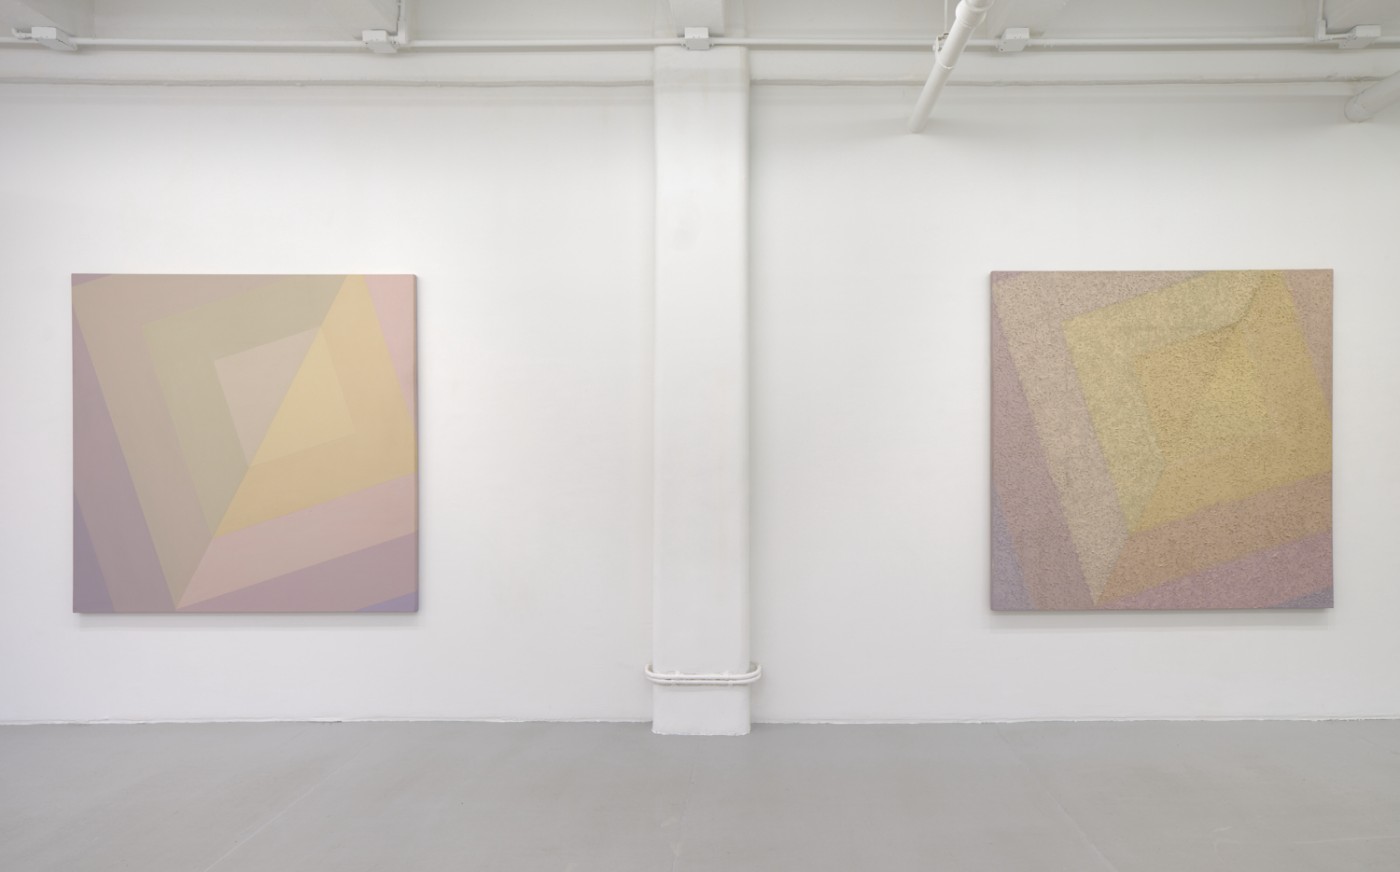 Installation image for Siri Berg: The Kabbalah Paintings from the 1980s, at David Richard Gallery